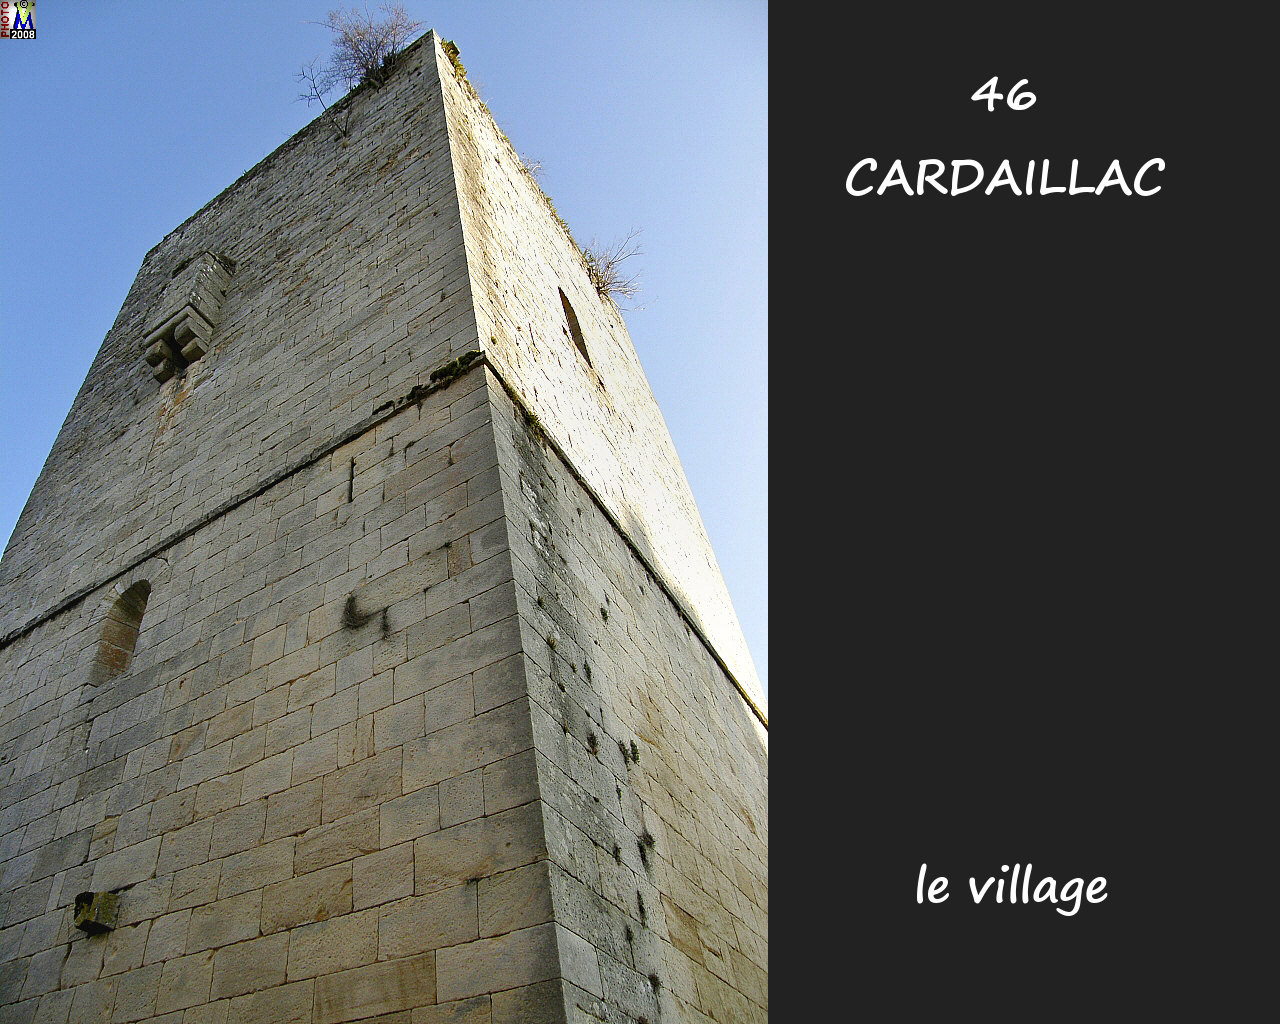 46CARDAILLAC_village_154.jpg